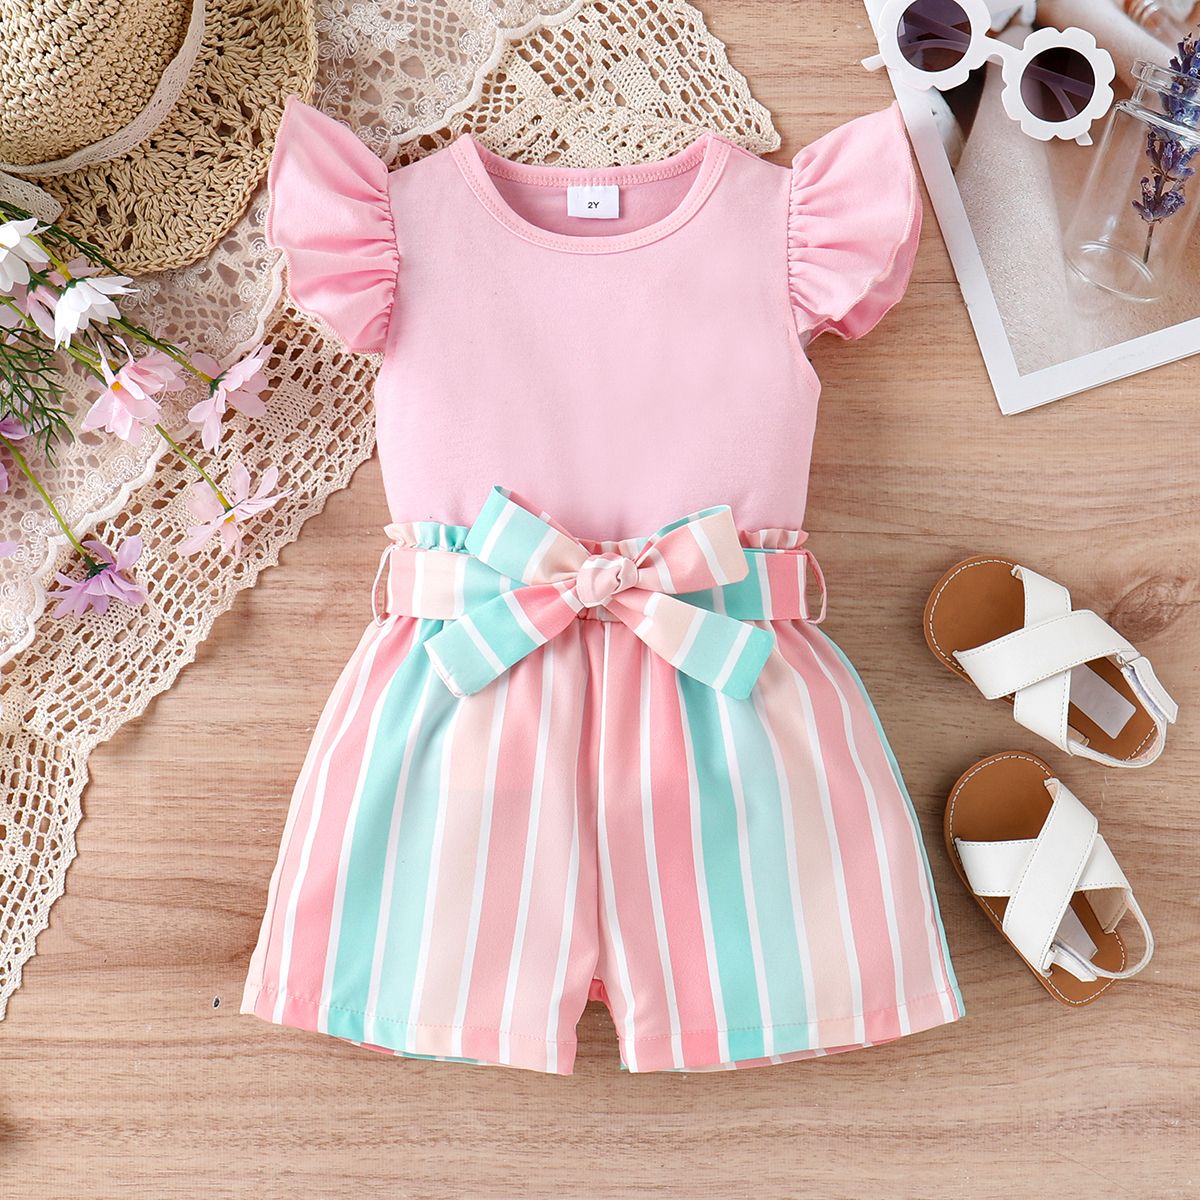 Buy Toddler Girls Sets Clothes Online for Sale - PatPat US Mobile